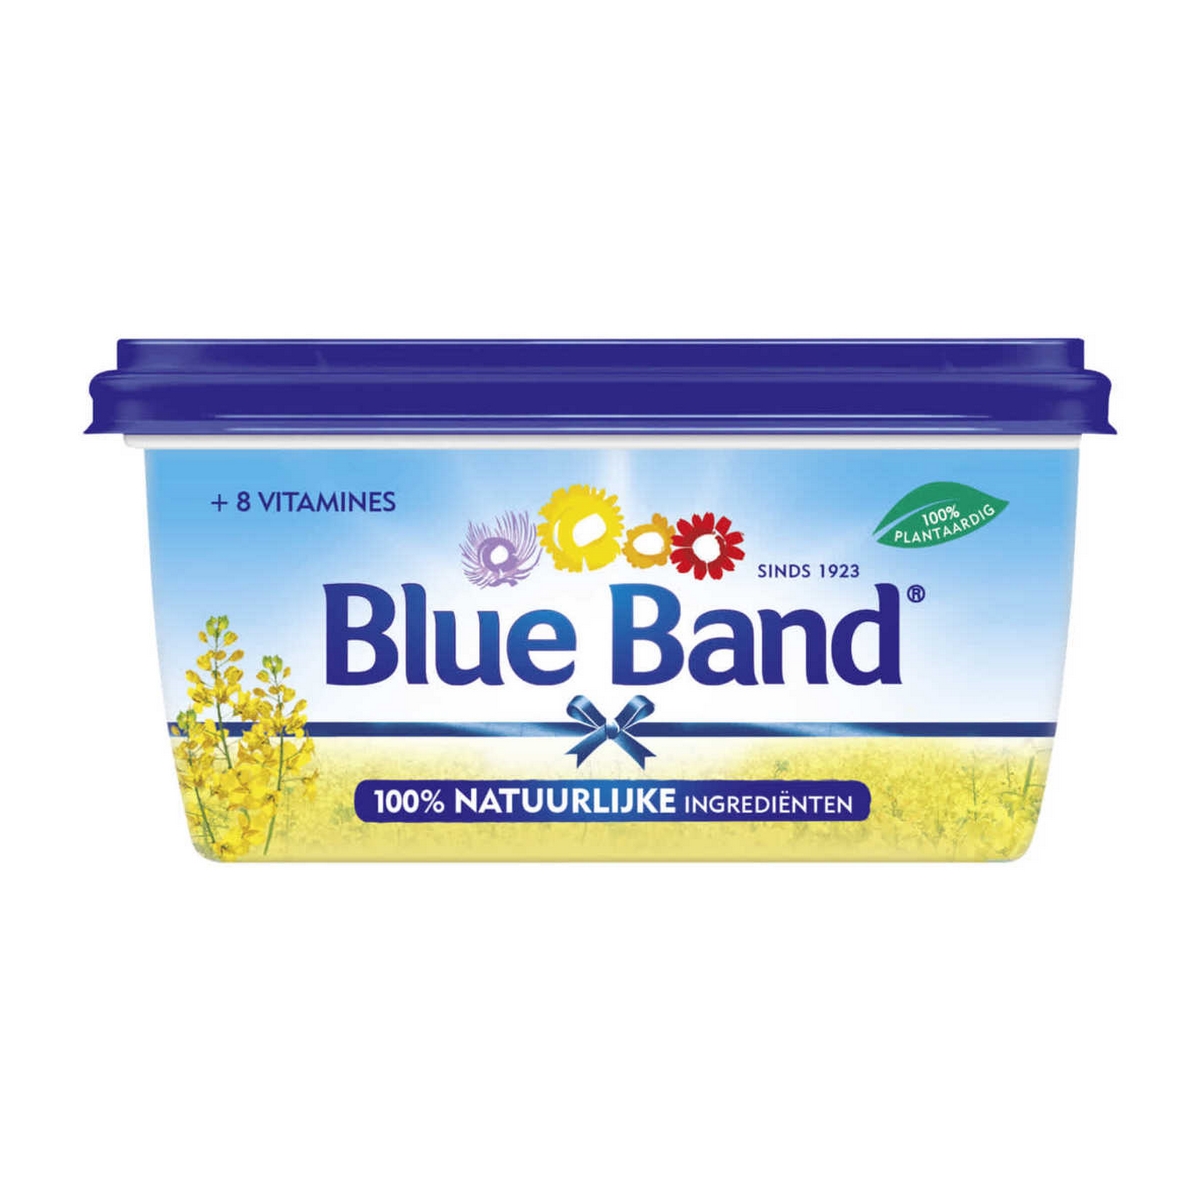 Blue Band Halvarine kuipje